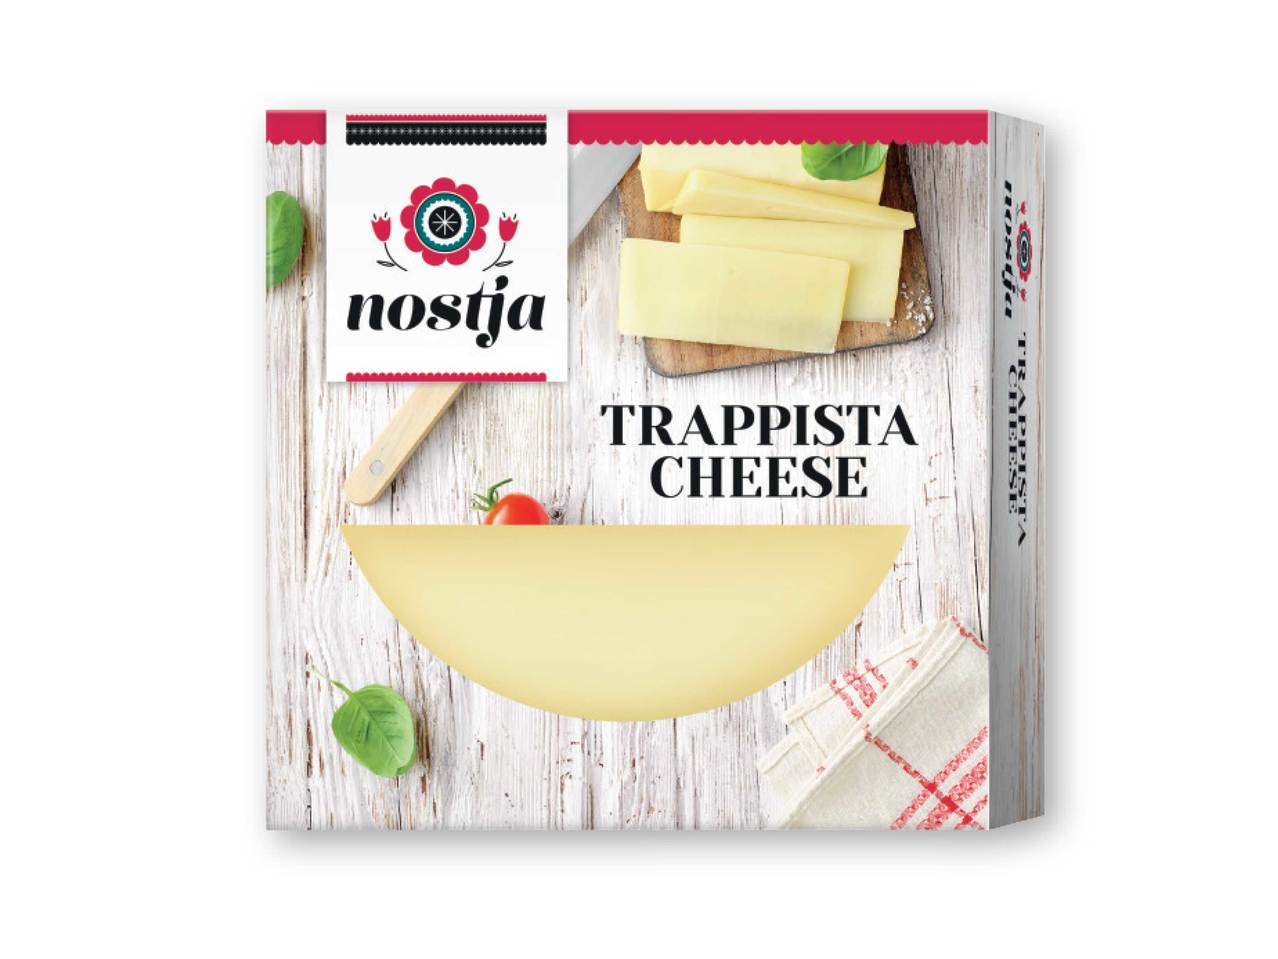 NOSTJA(R) Trappista Cheese